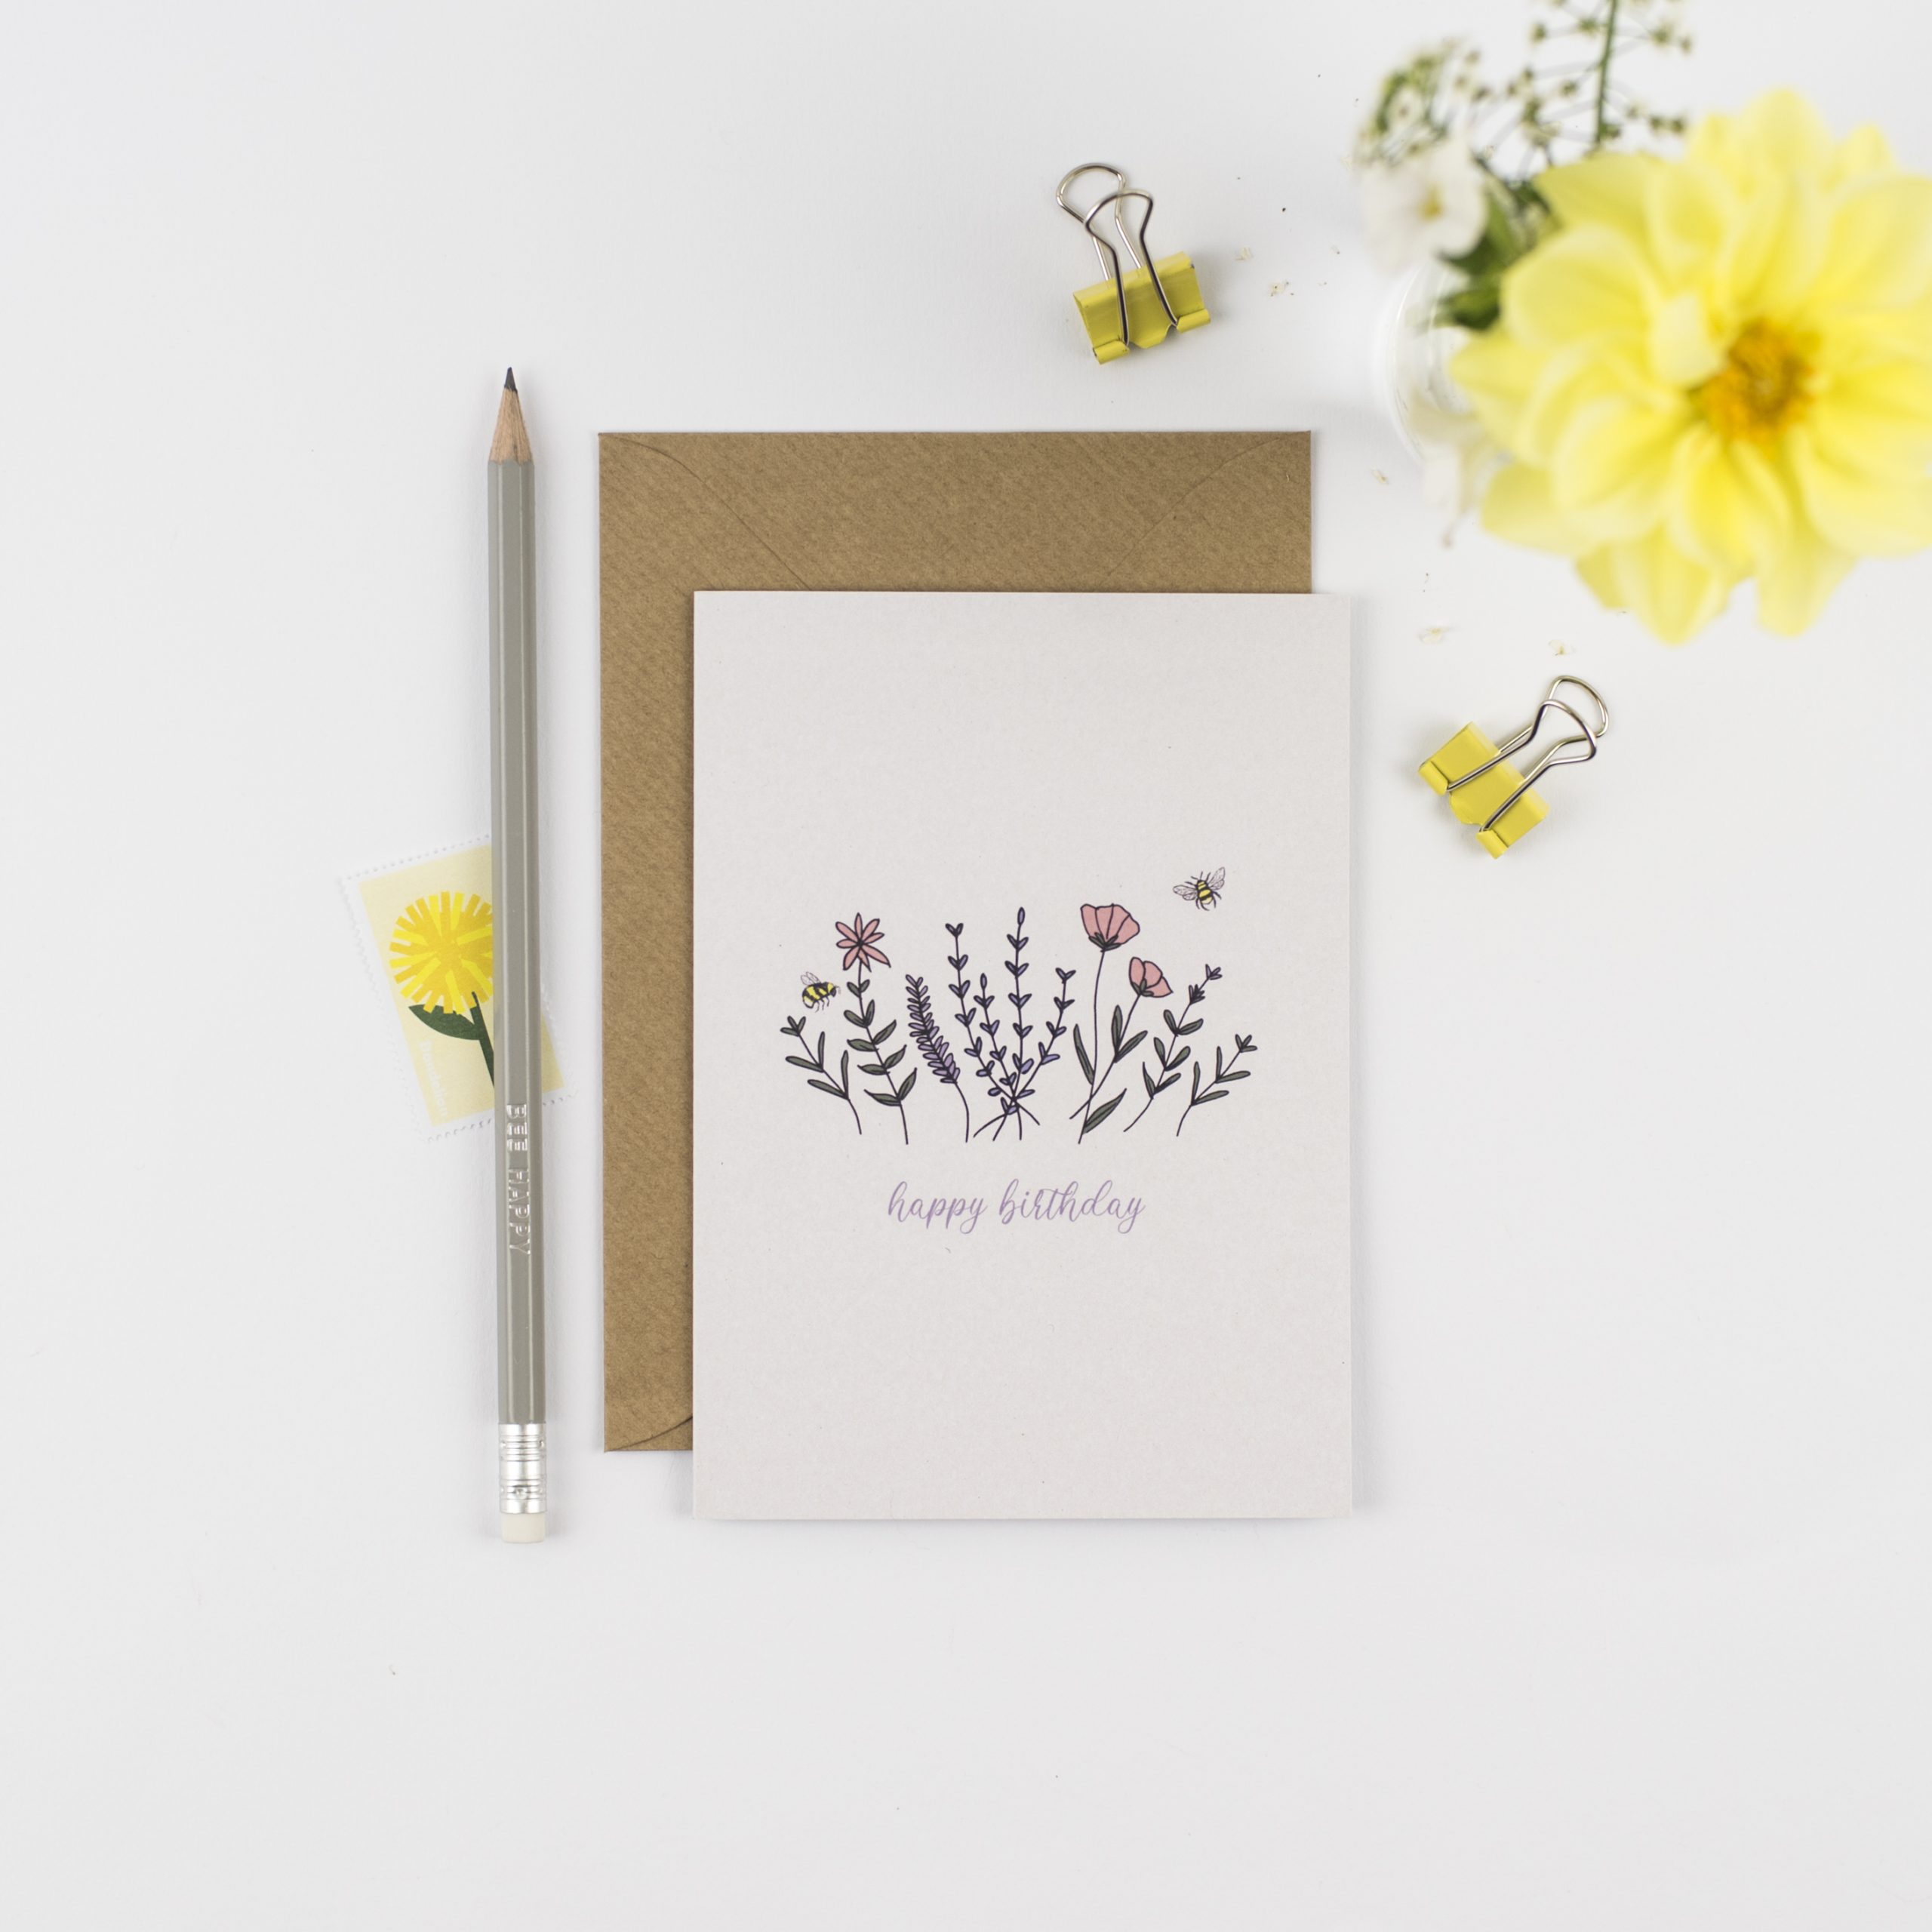 Wildflower meadow card